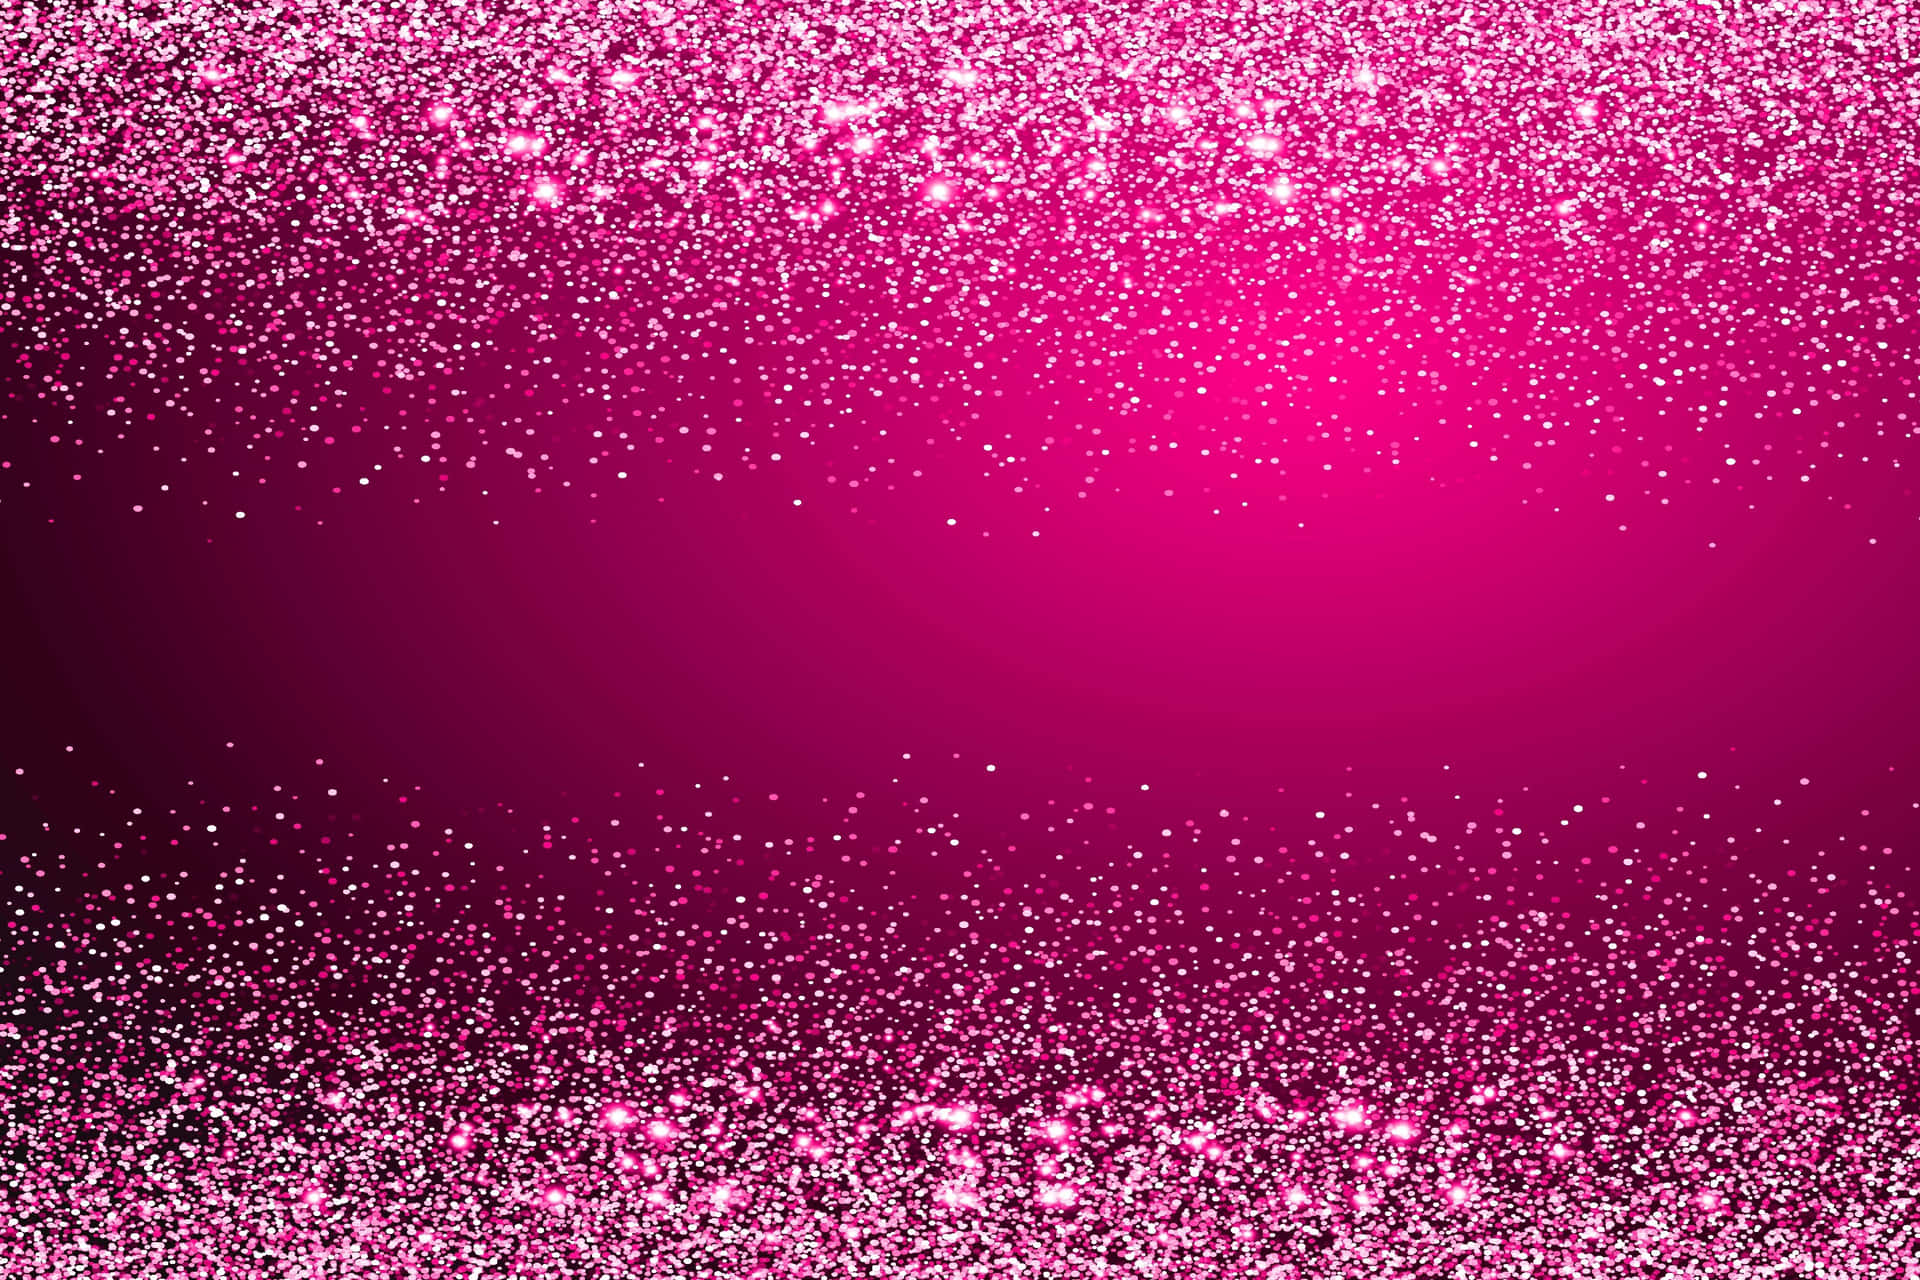 Pink Sparkles 3000 X 2000 Wallpaper Wallpaper